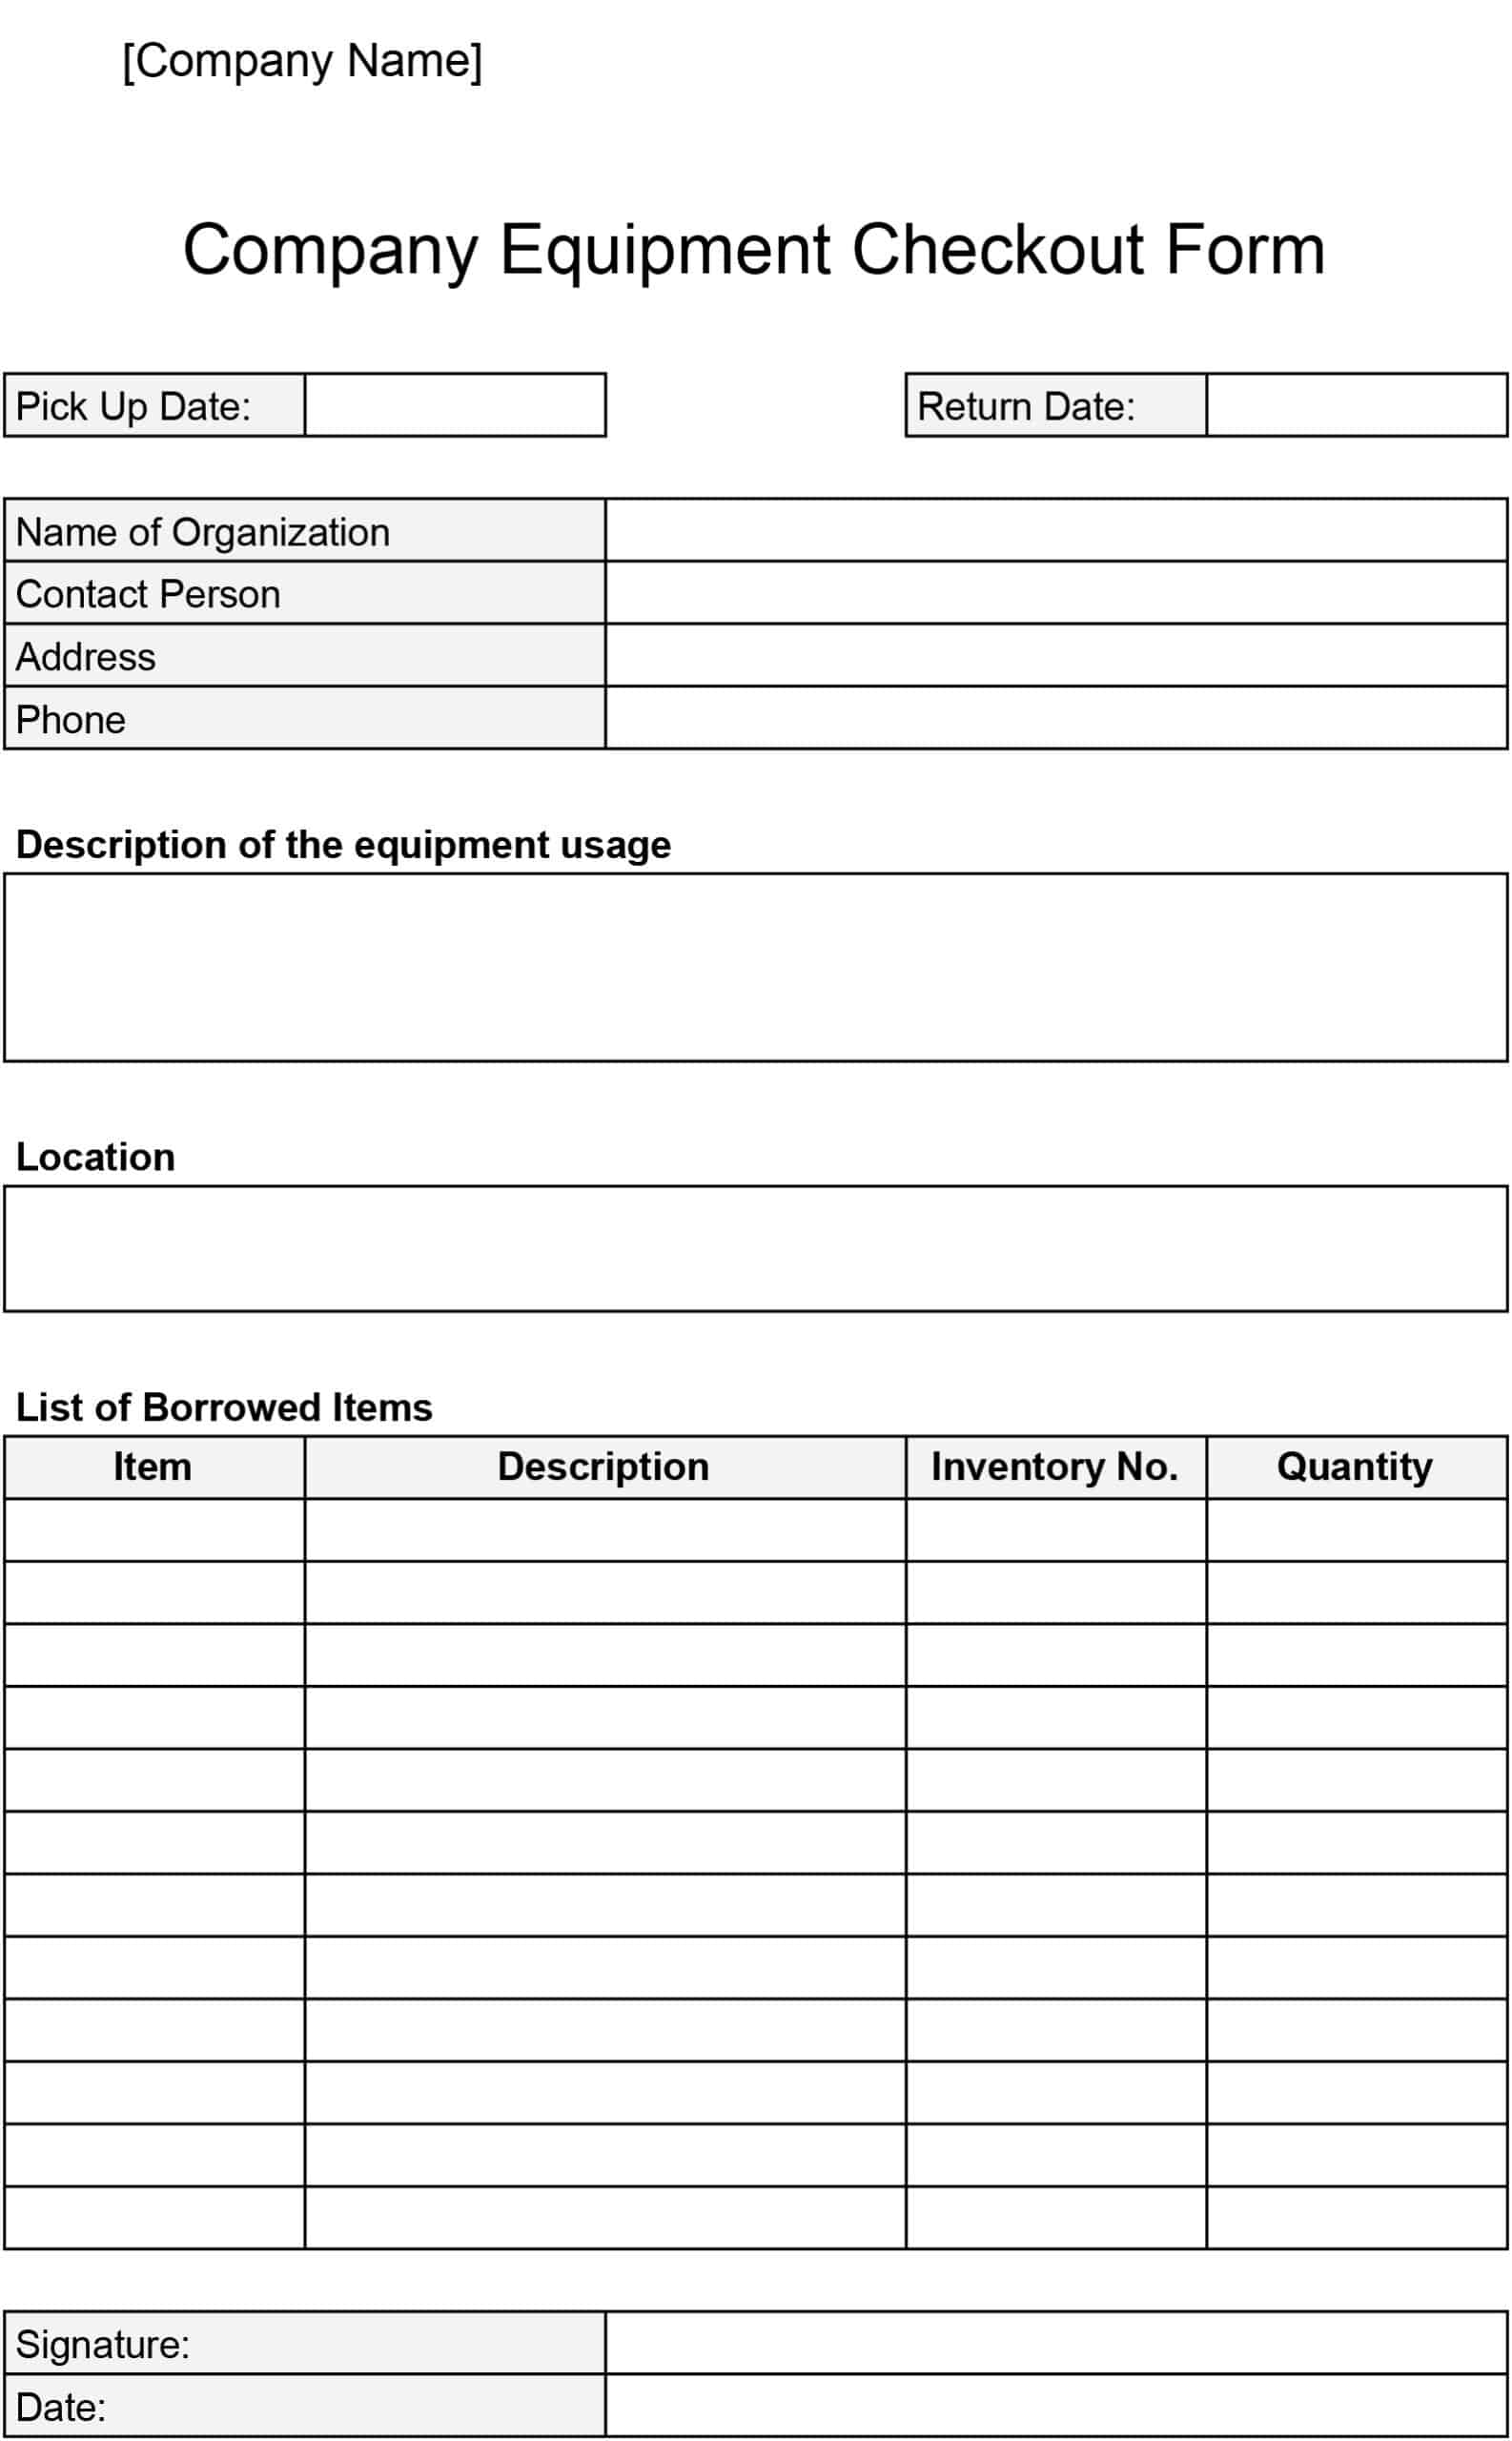 Company Equipment Checkout Form